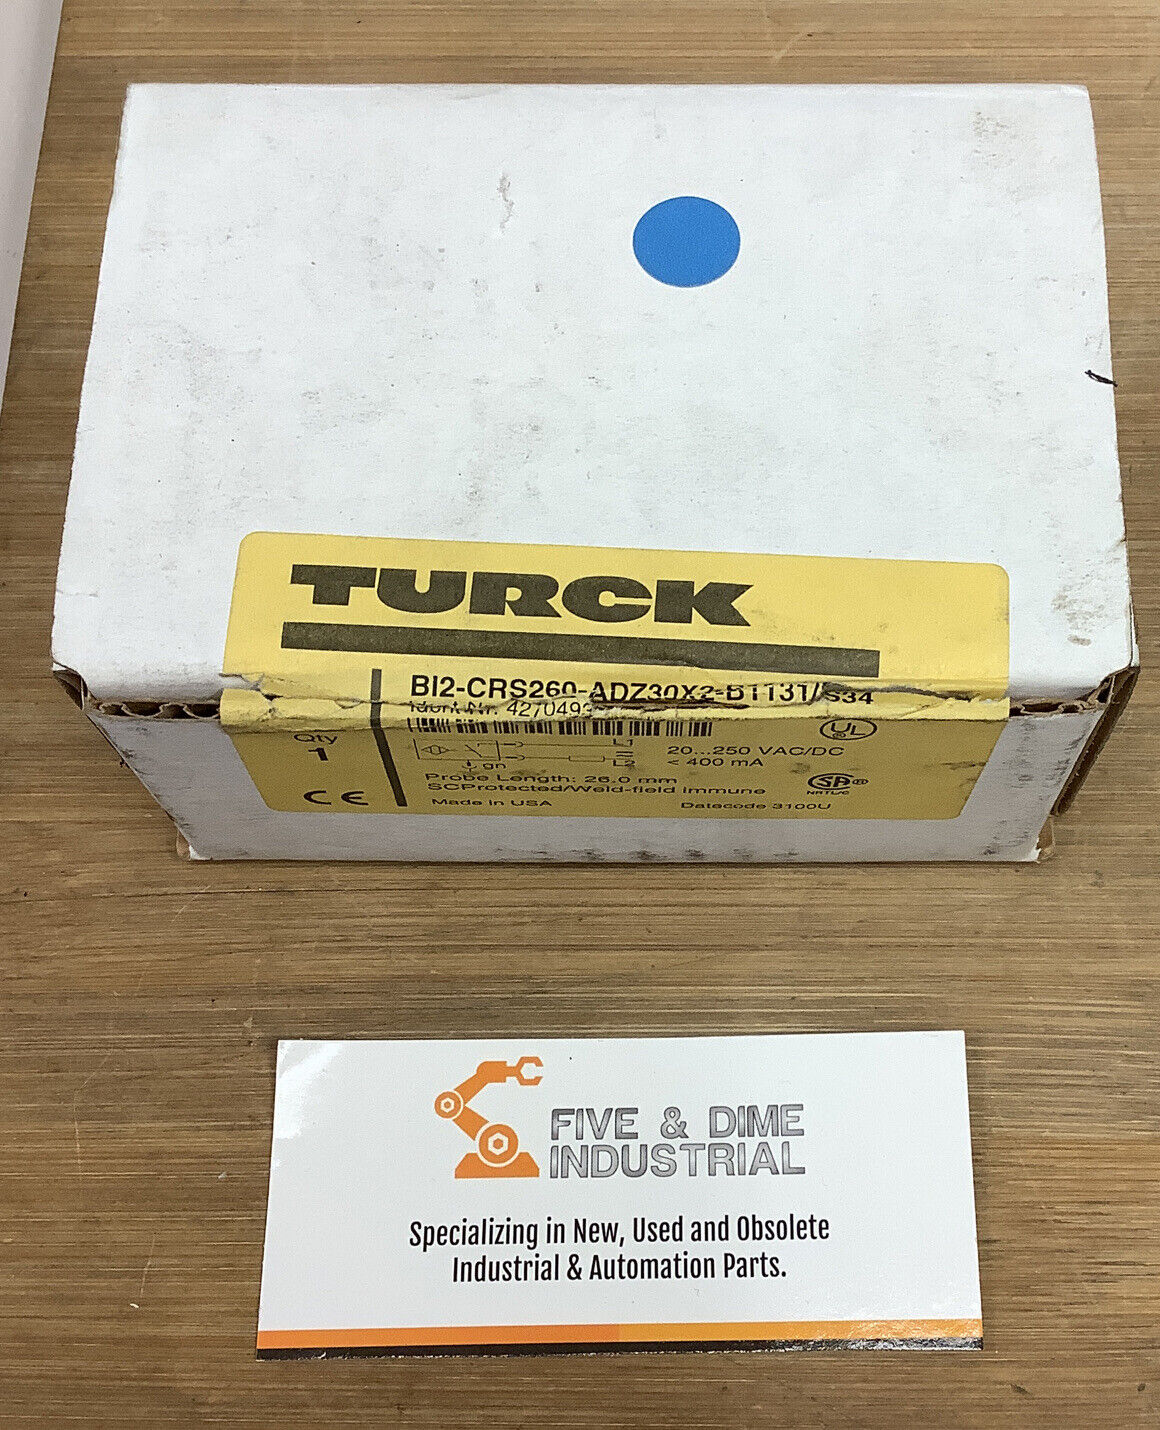 Turck Proximity Sensor BI 2-CRS260-ADZ30X2-B1131/S34  (BL137)